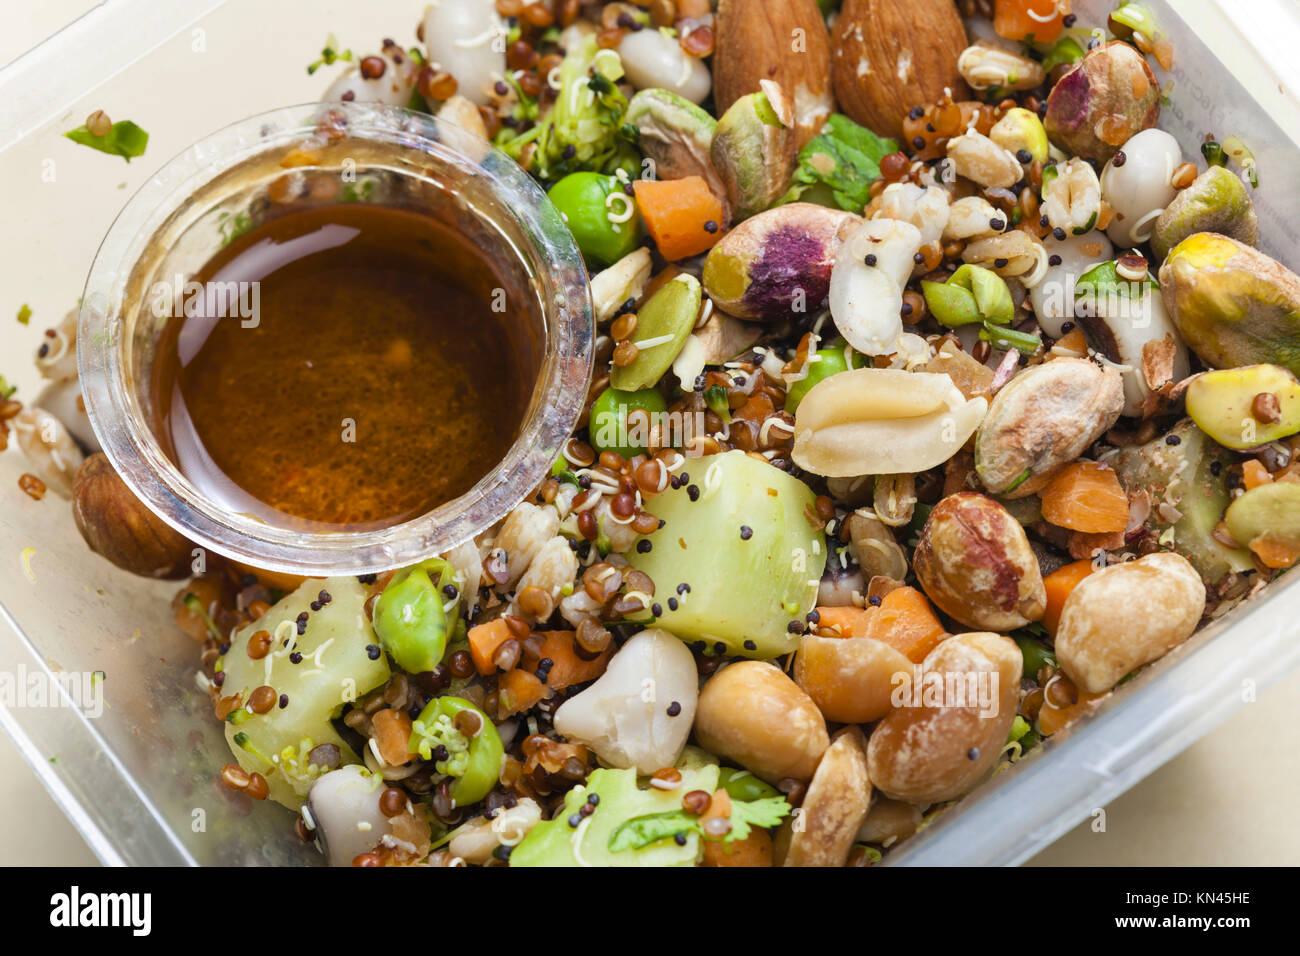 legume salad with almonds. Stock Photo